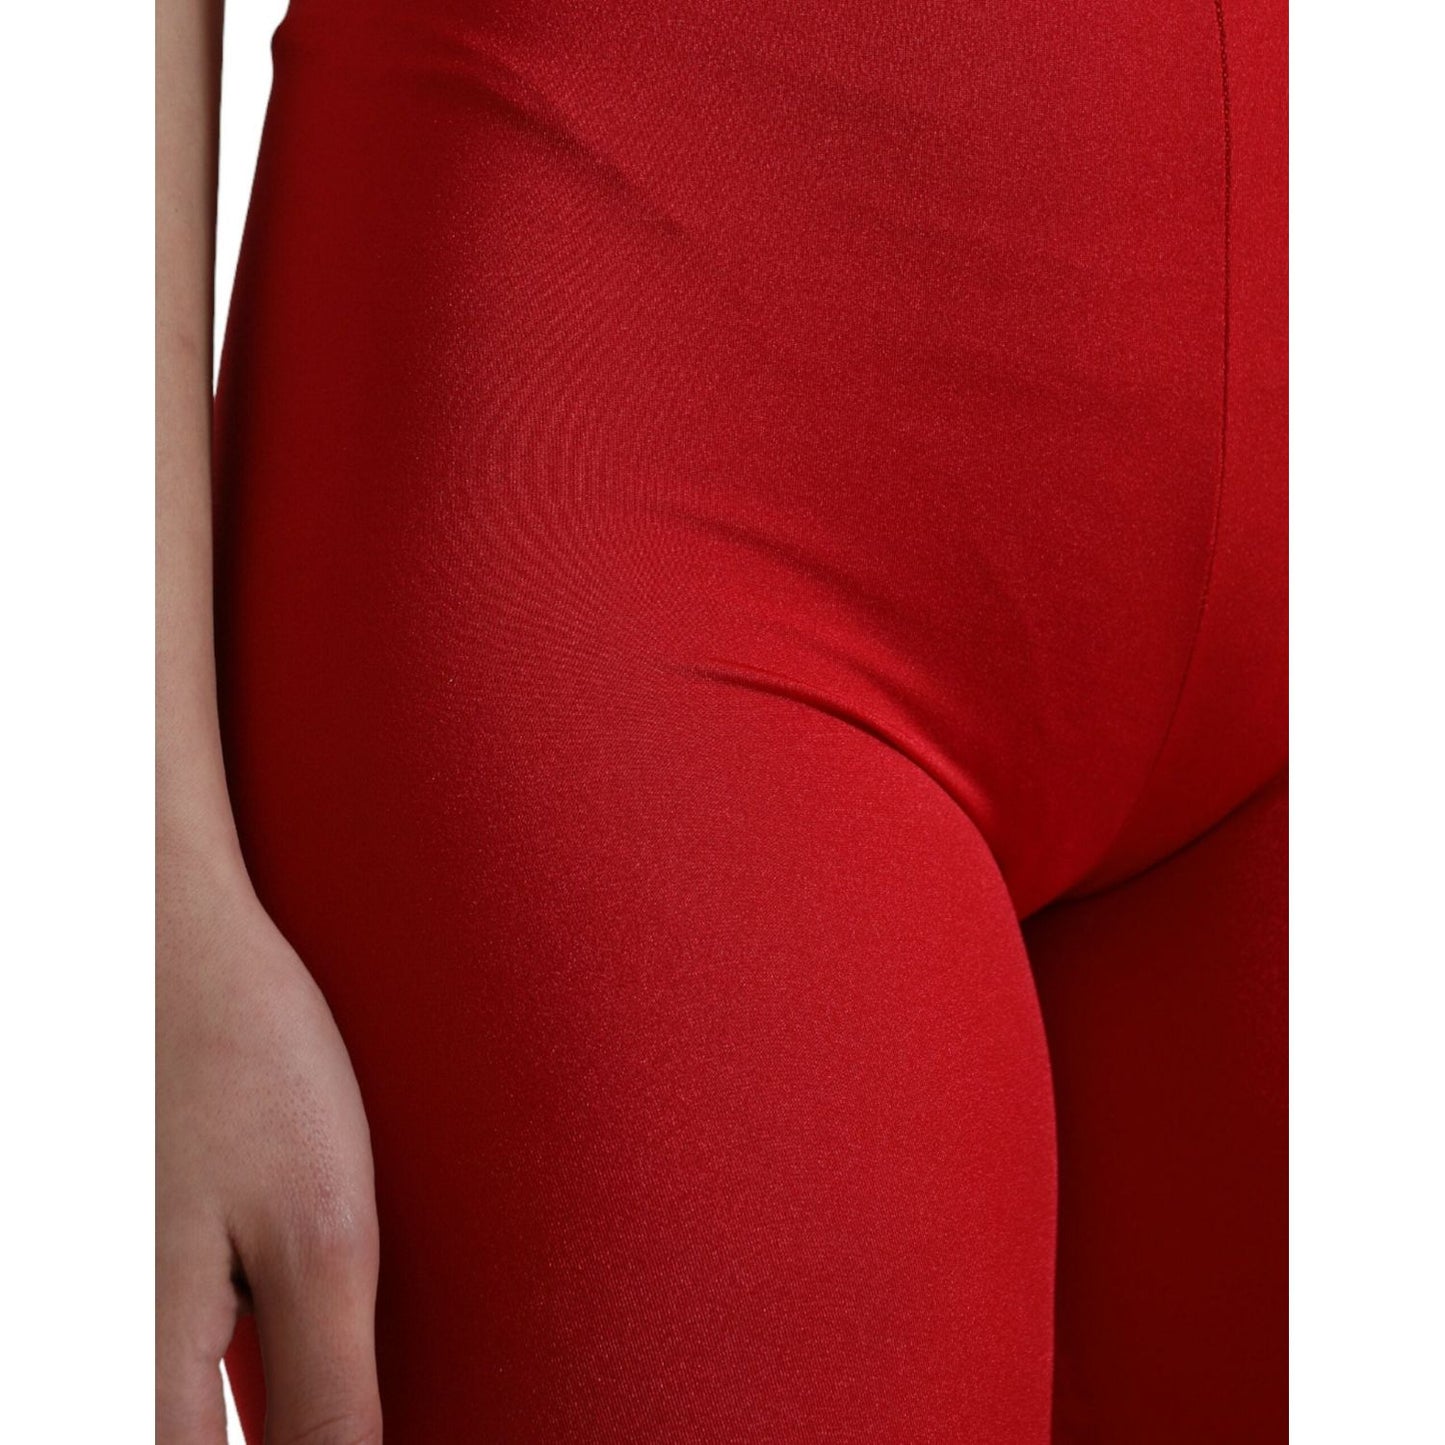 Dolce & Gabbana Red Nylon Stretch Slim Leggings Pants red-nylon-stretch-slim-leggings-pants 465A6064-BG-scaled-44dc3b4d-7a3.jpg